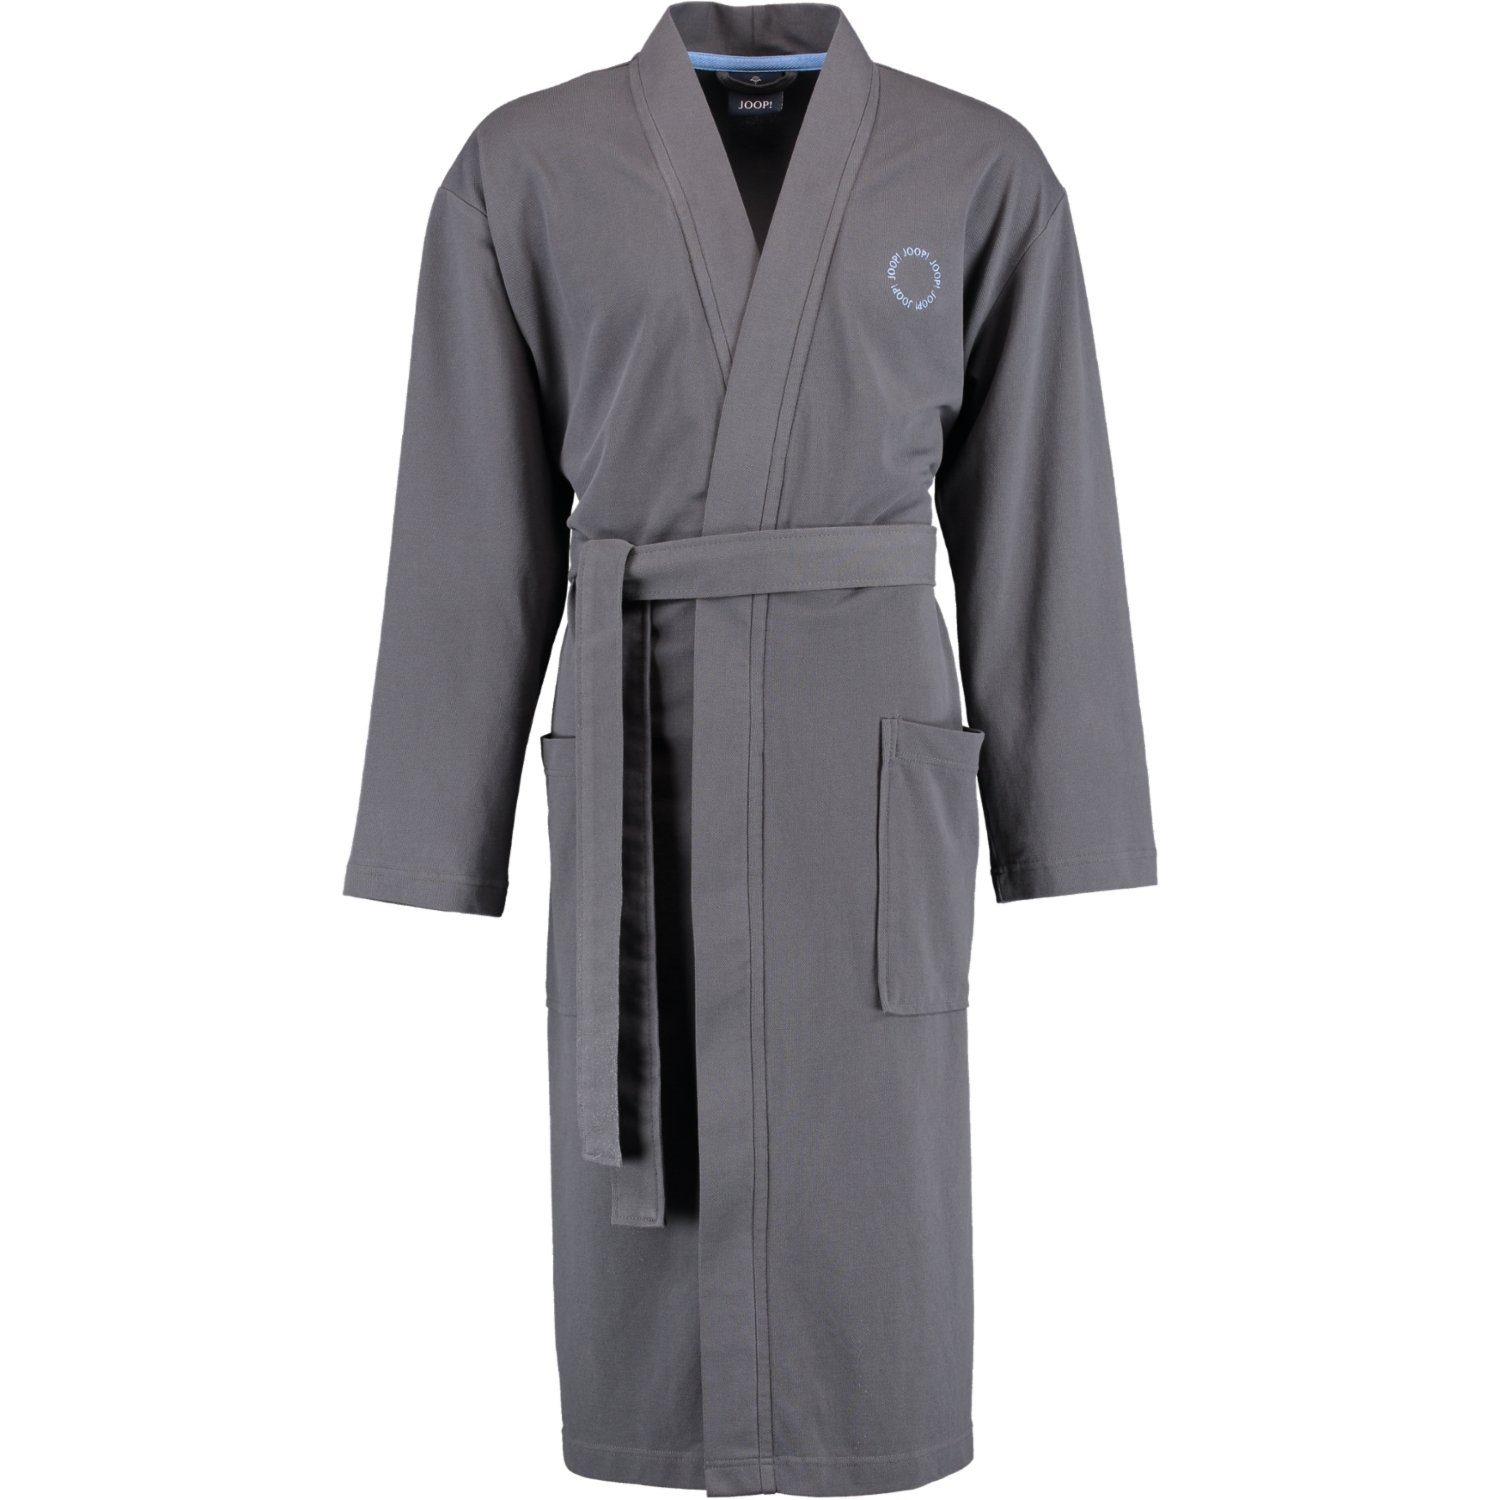 Joop! Herrenbademantel 1655 Kimono Pique, Kimono, 100% Baumwolle Anthrazit (71) | Herren Bademäntel